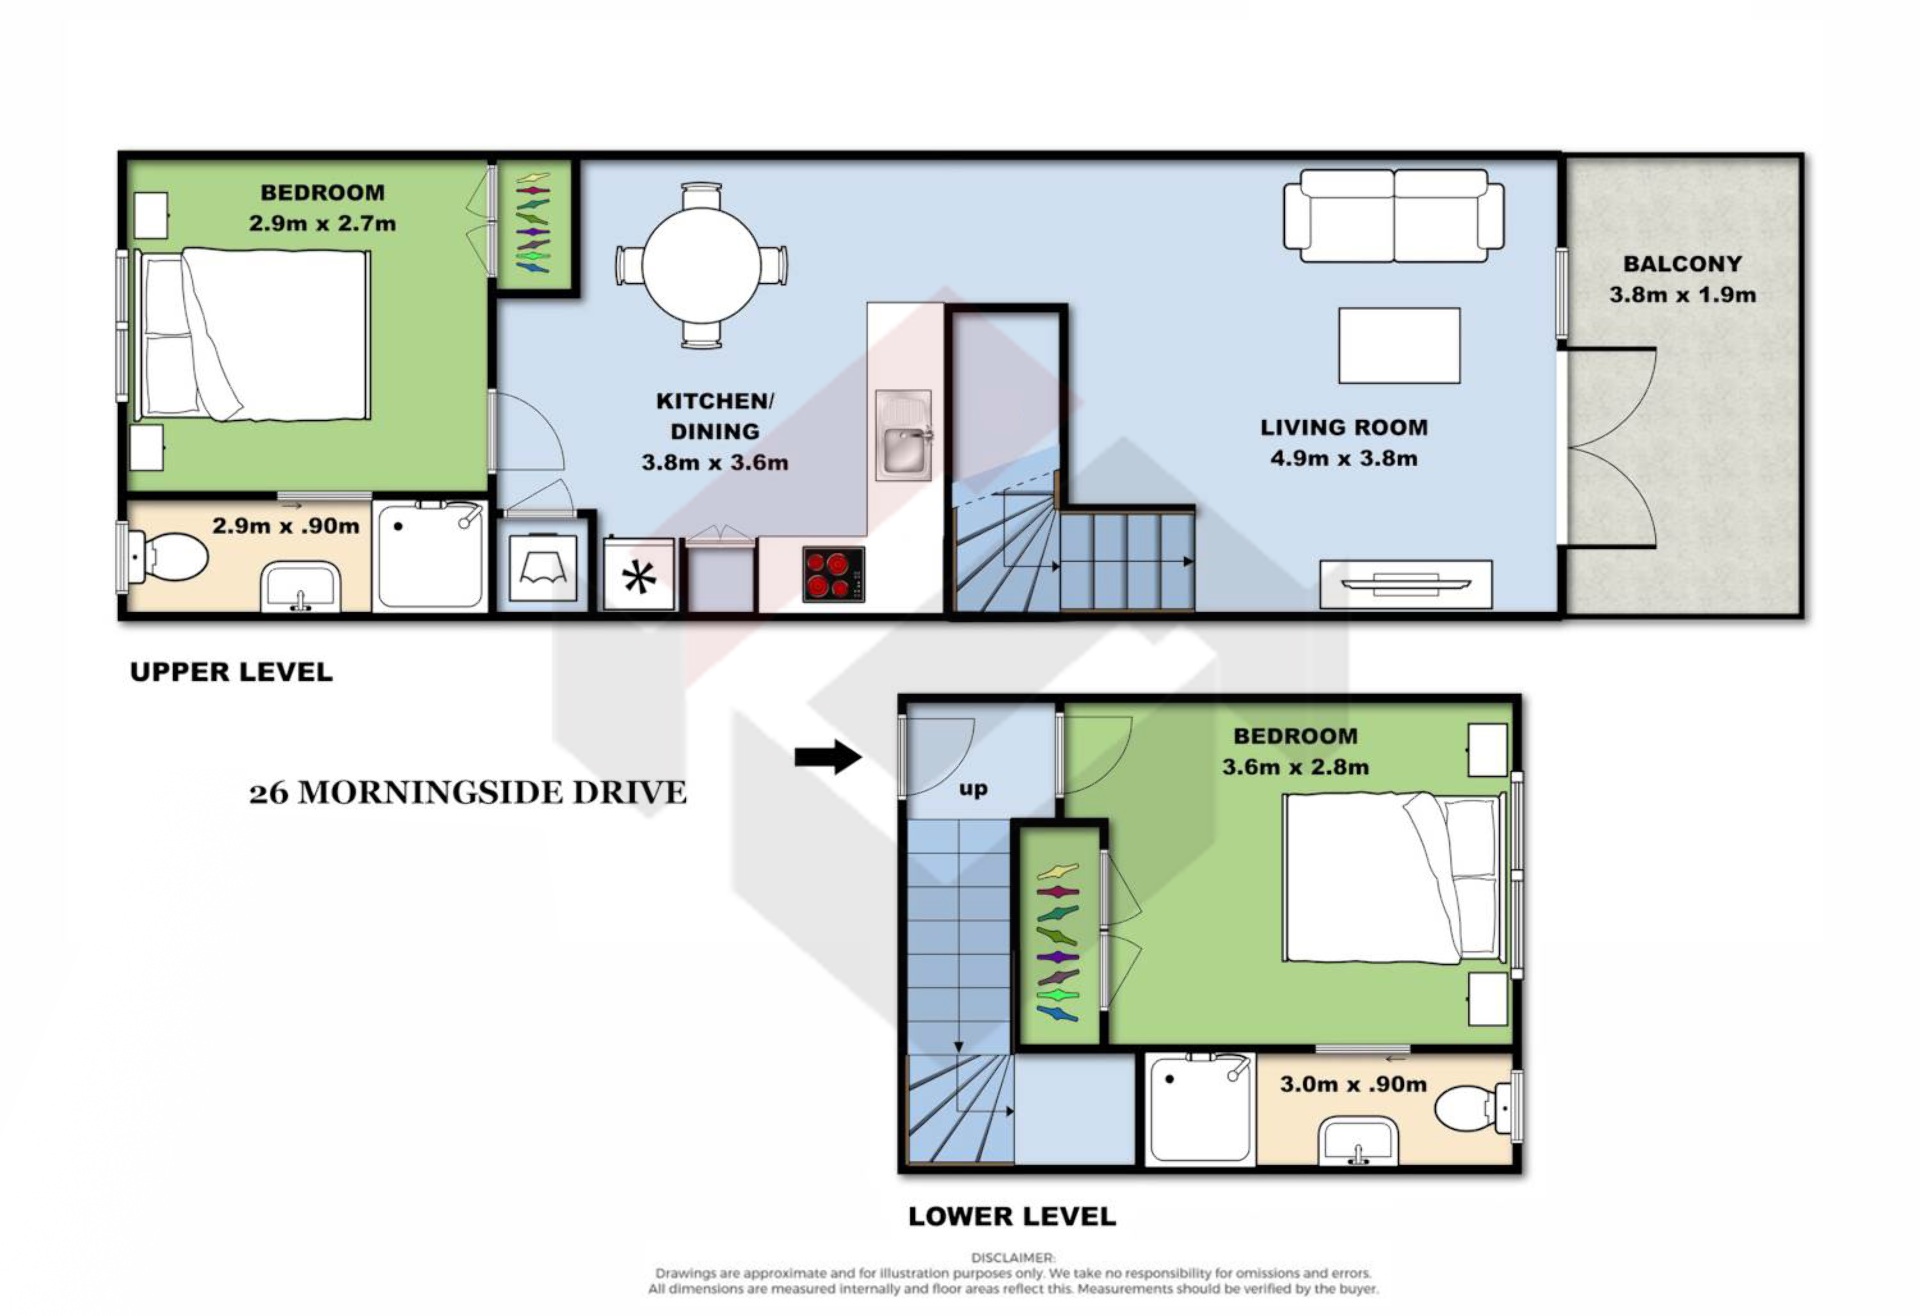 Floorplan | 26 Morningside Drive, Kingsland | Apartment Specialists